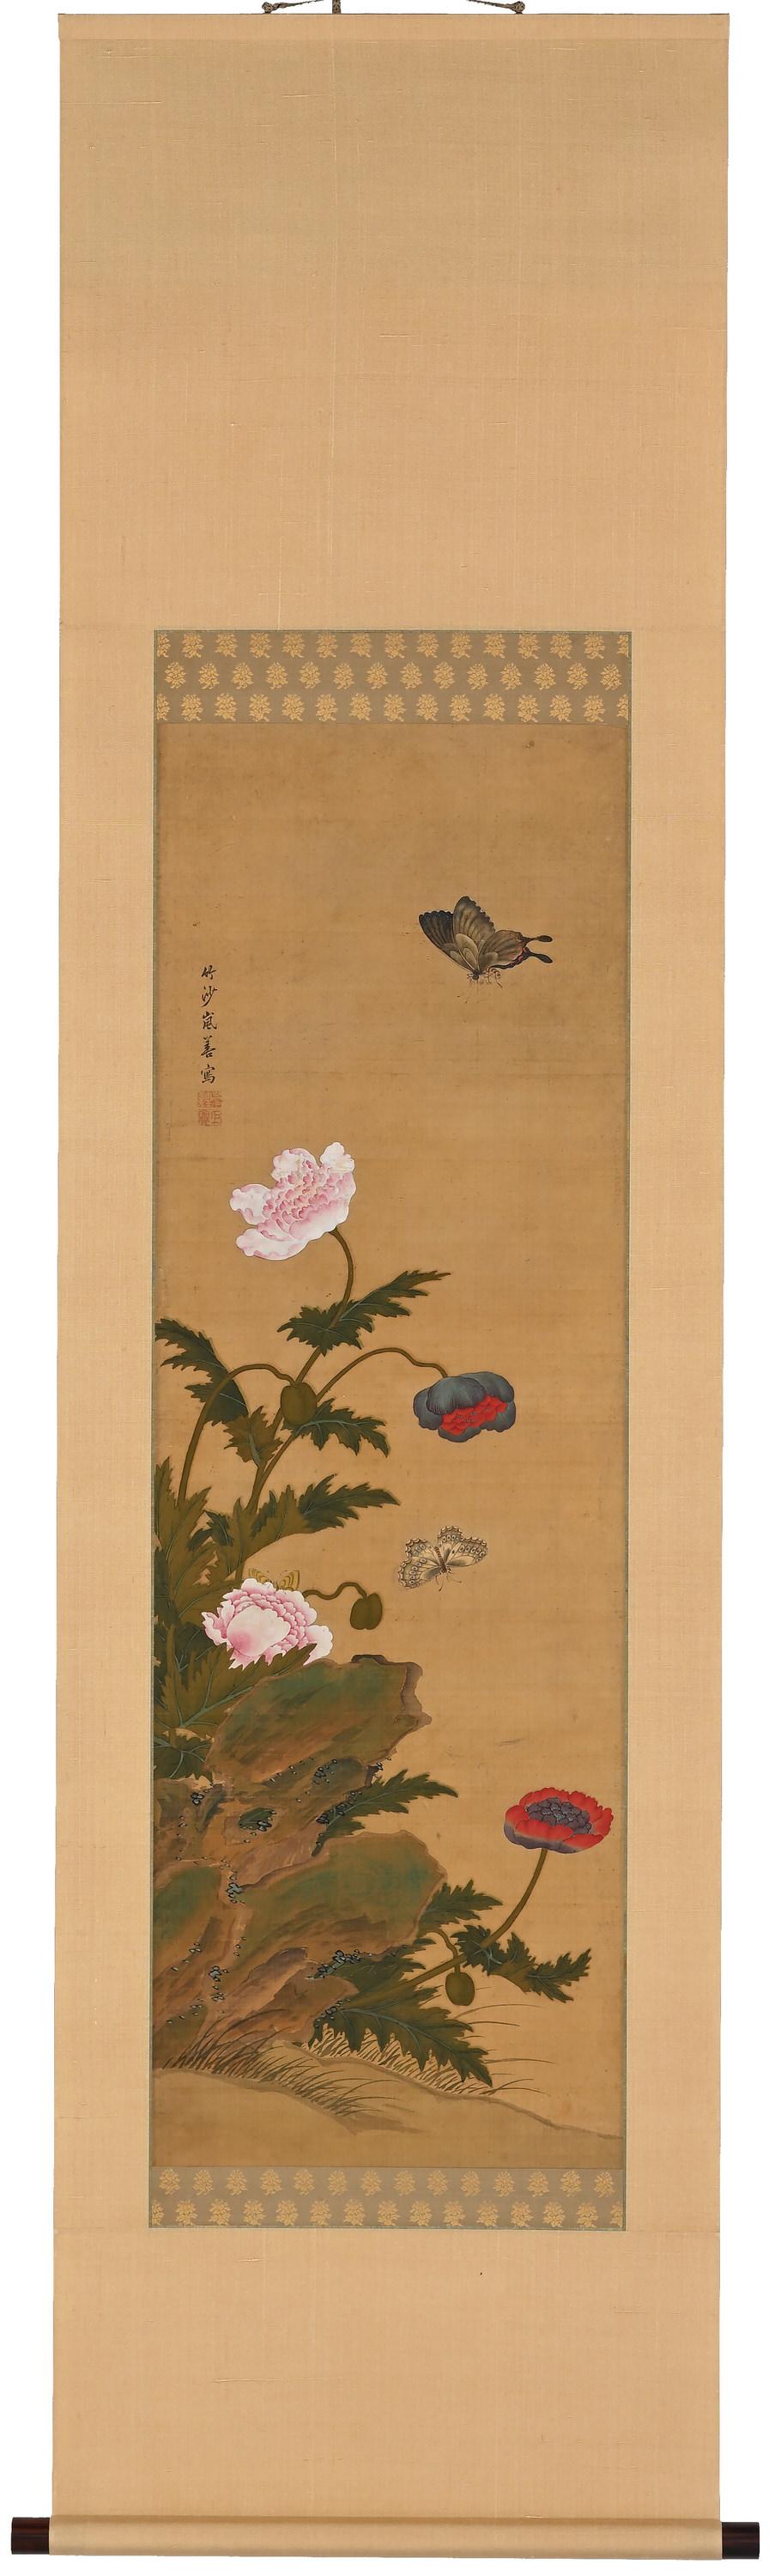 Poppies & Butterflies

Ink, pigment and gofun on silk

Igarashi Chikusa (1774-1844)

Signature: Chikusa Ran Zen

Upper Seal: Ran Shuzen
Lower Seal: Kyoho

Dimensions:

Scroll: H. 68” x W. 18” (172cm x 45cm)
Image: H. 38.5’’ x W. 12.5’’